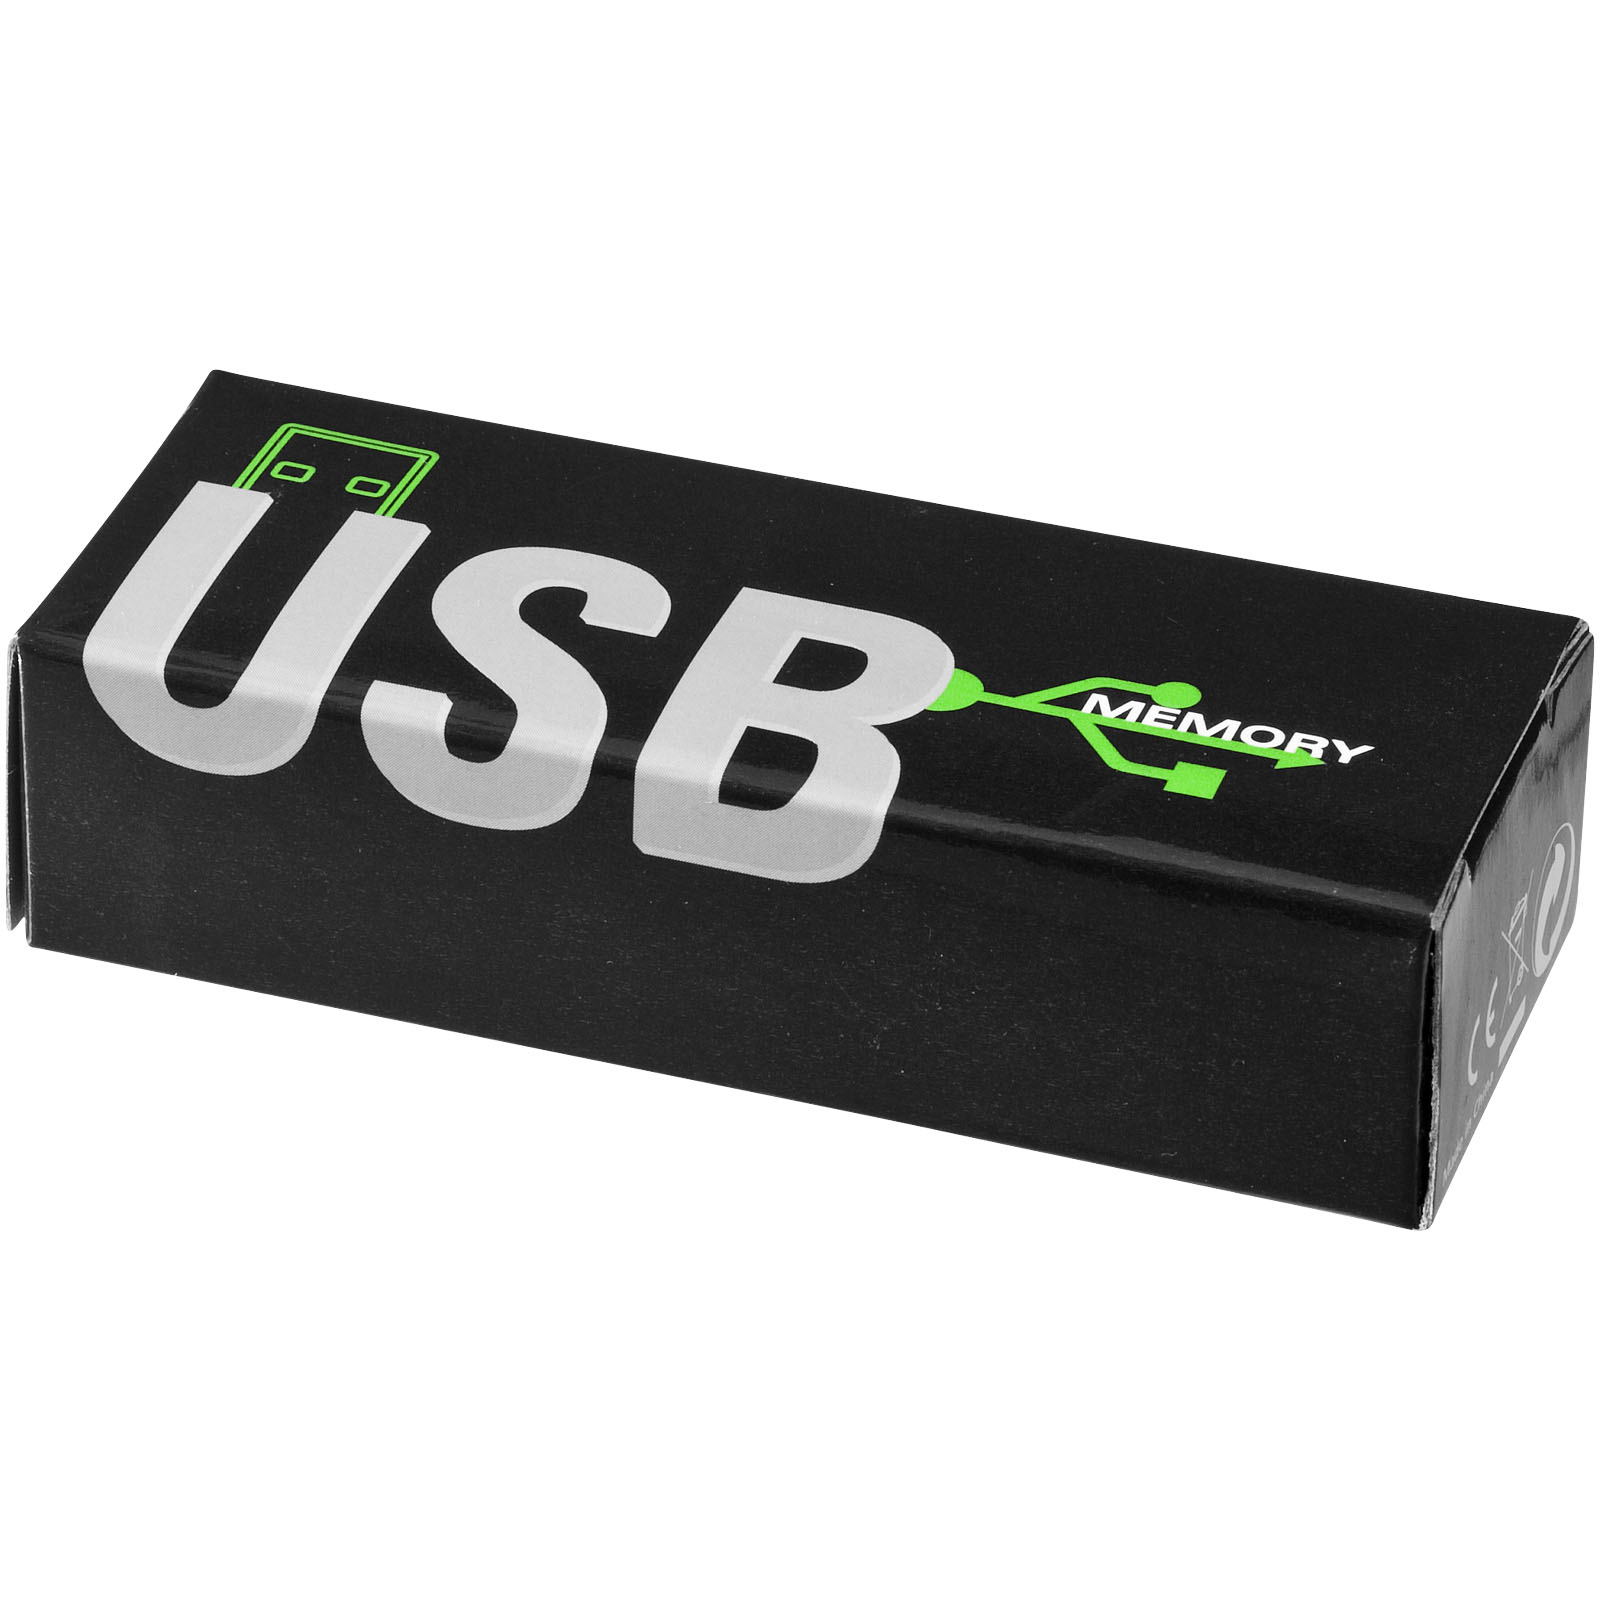 Advertising USB Flash Drives - Rotate-metallic 4GB USB flash drive - 1